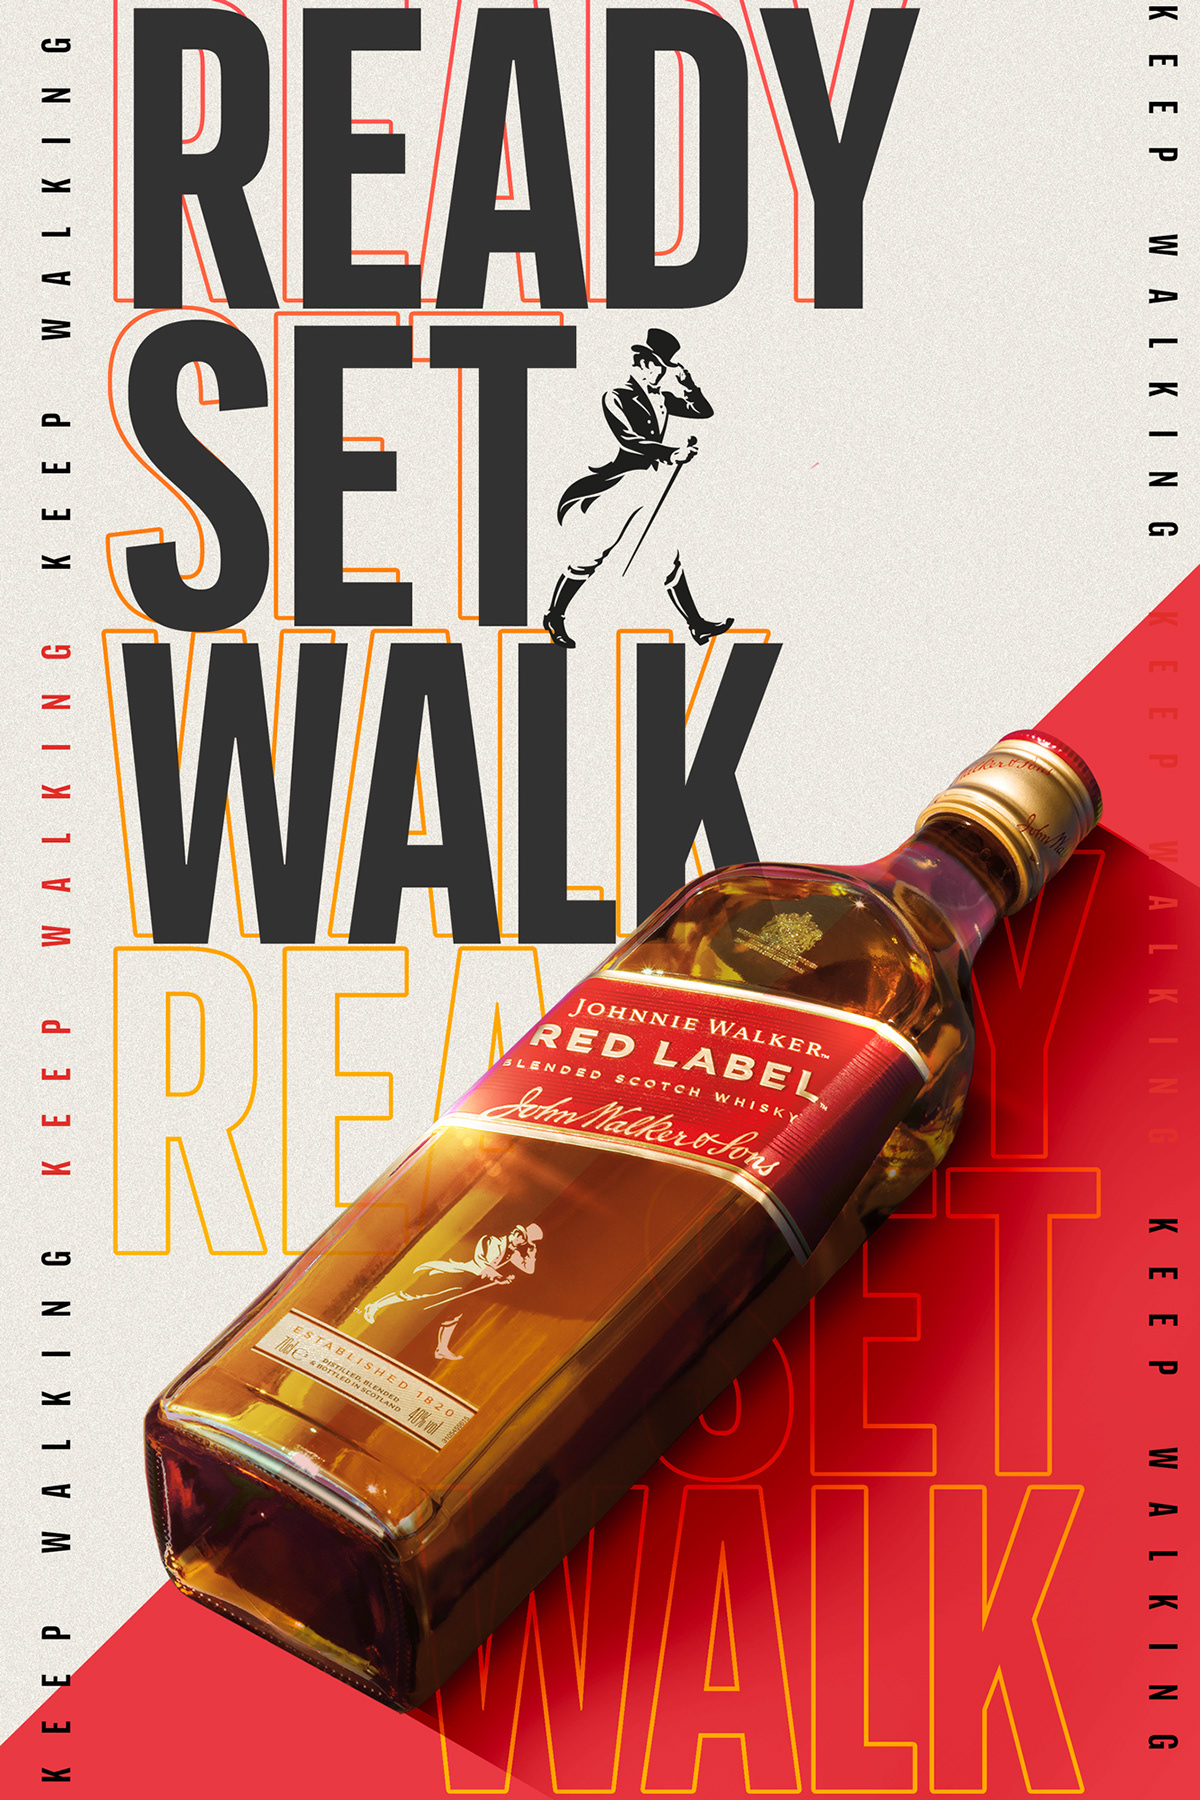 alcohol bottle diageo drink Johnnie Walker ready set walk Whisky